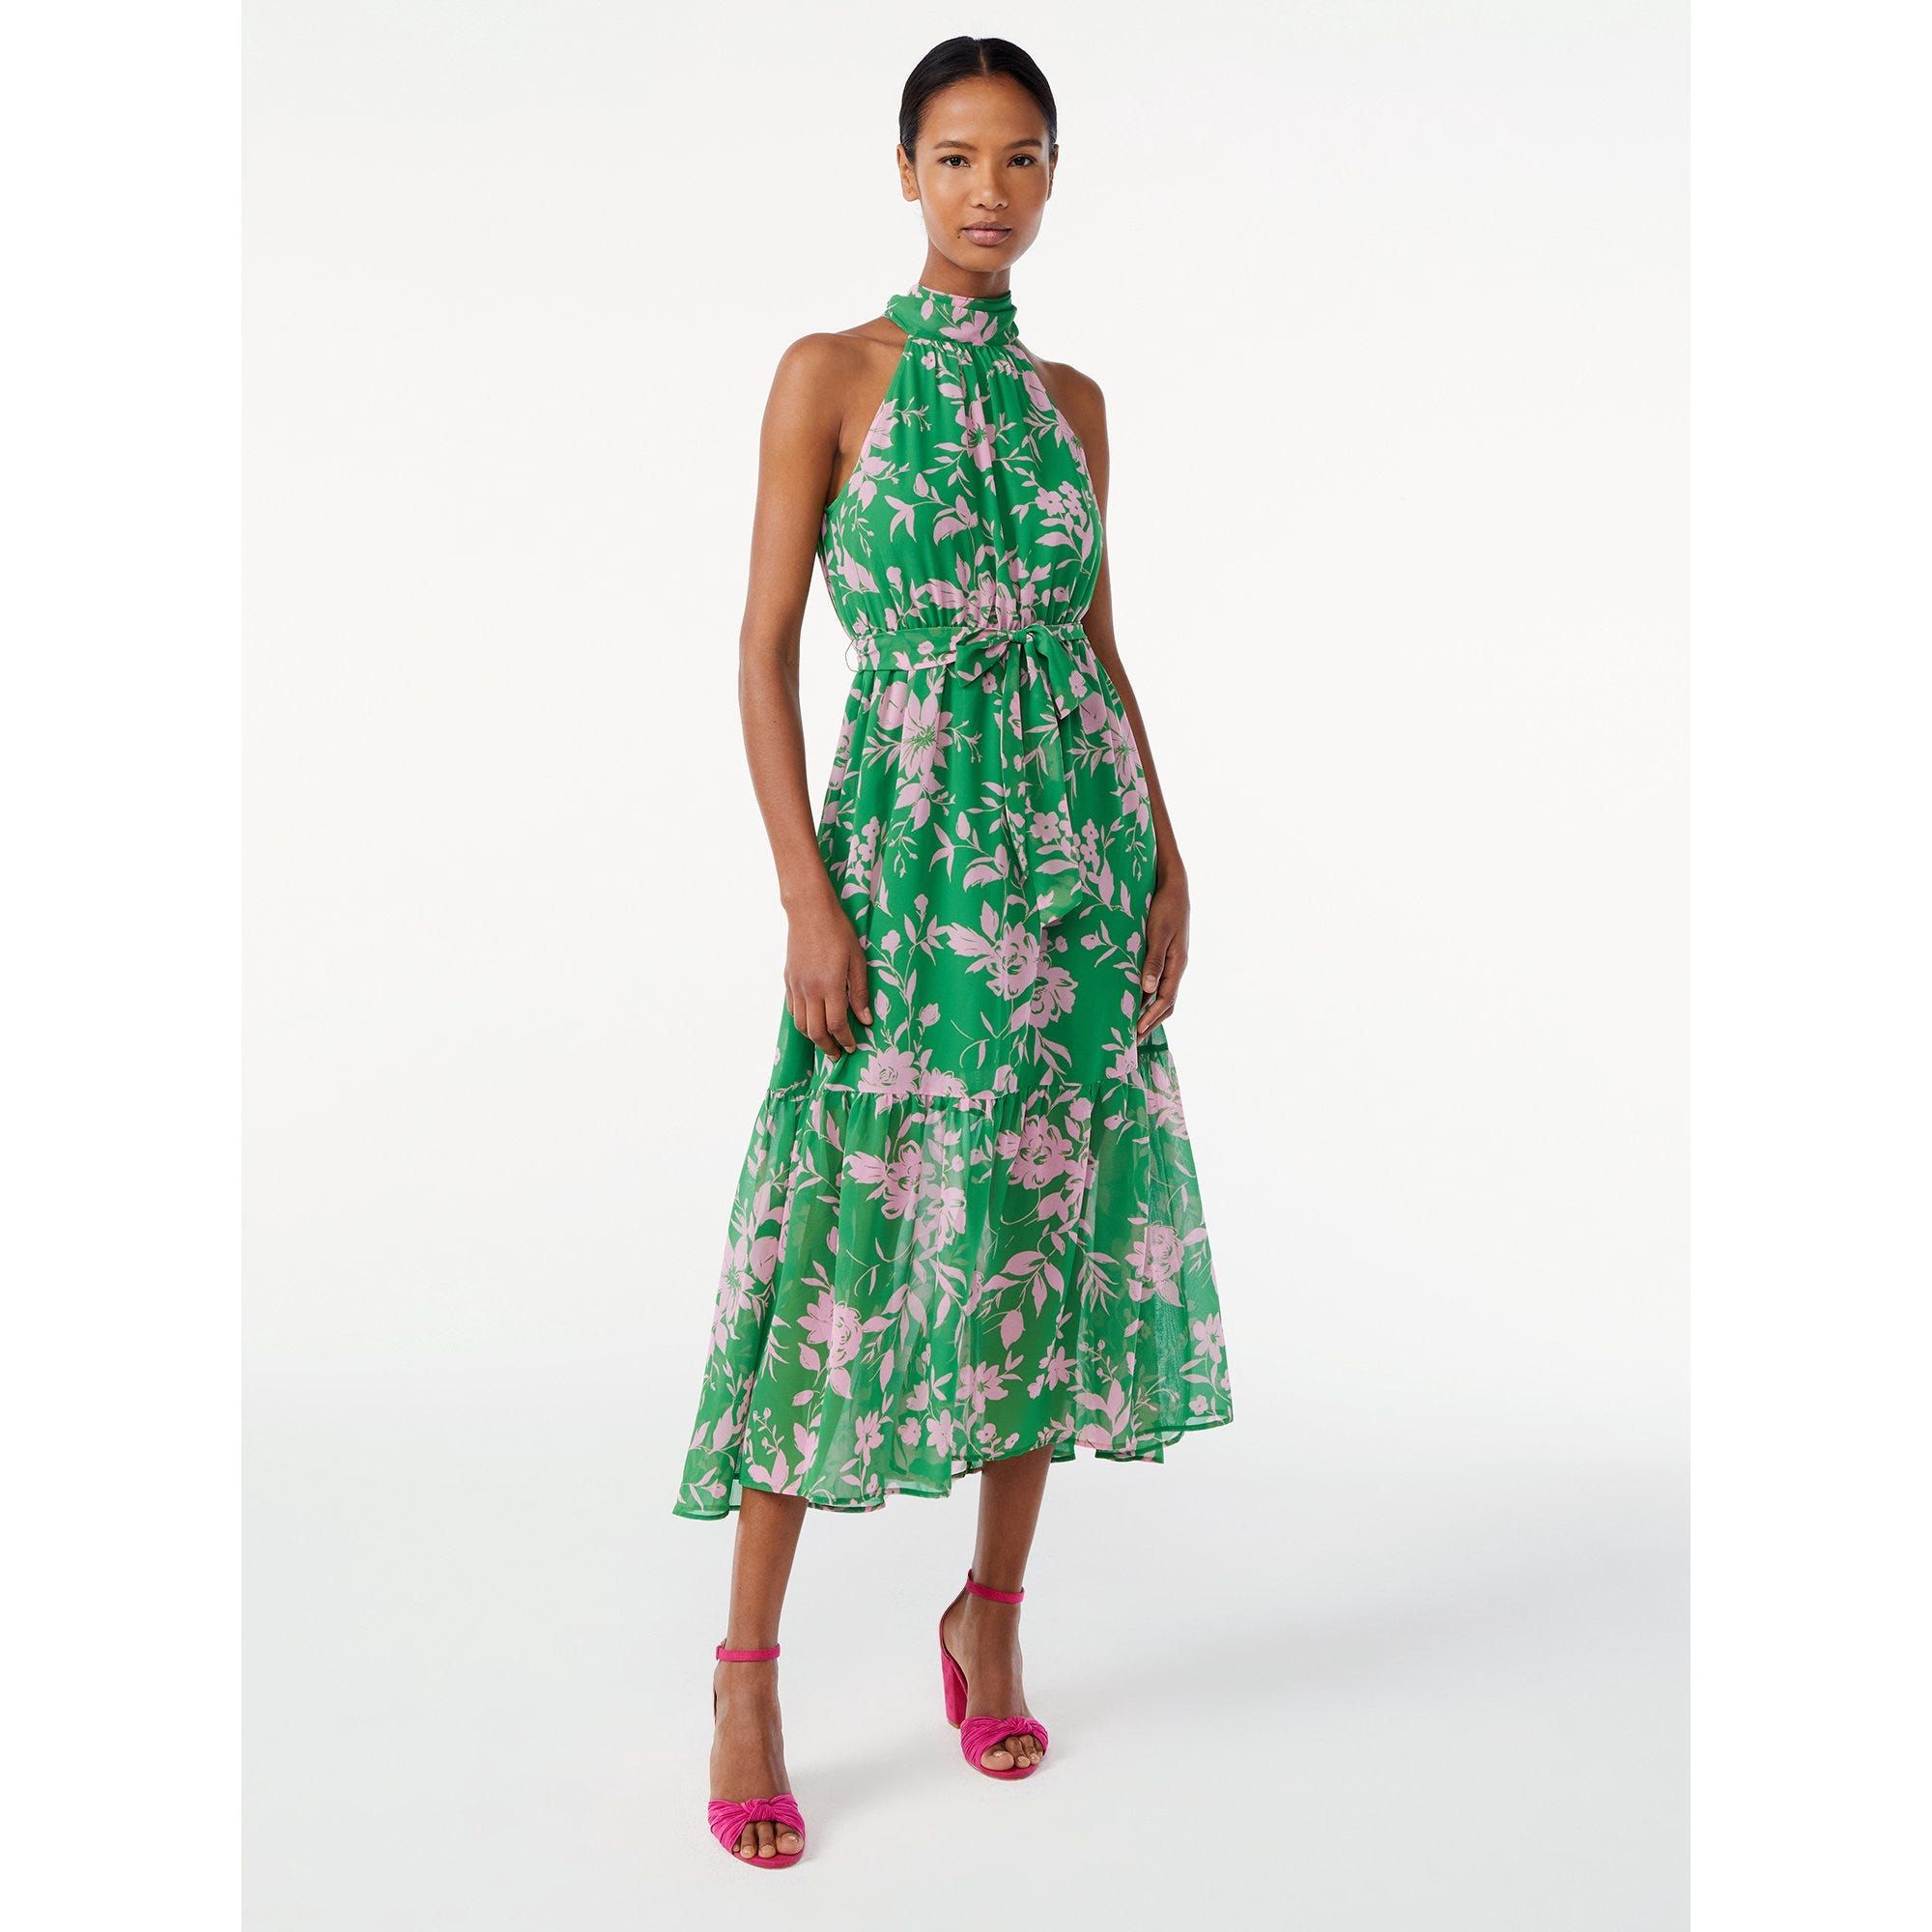 Green Floral Summer Dress Sleeveless Casual Dress Loose Fit Mini Dress Tank Dress M